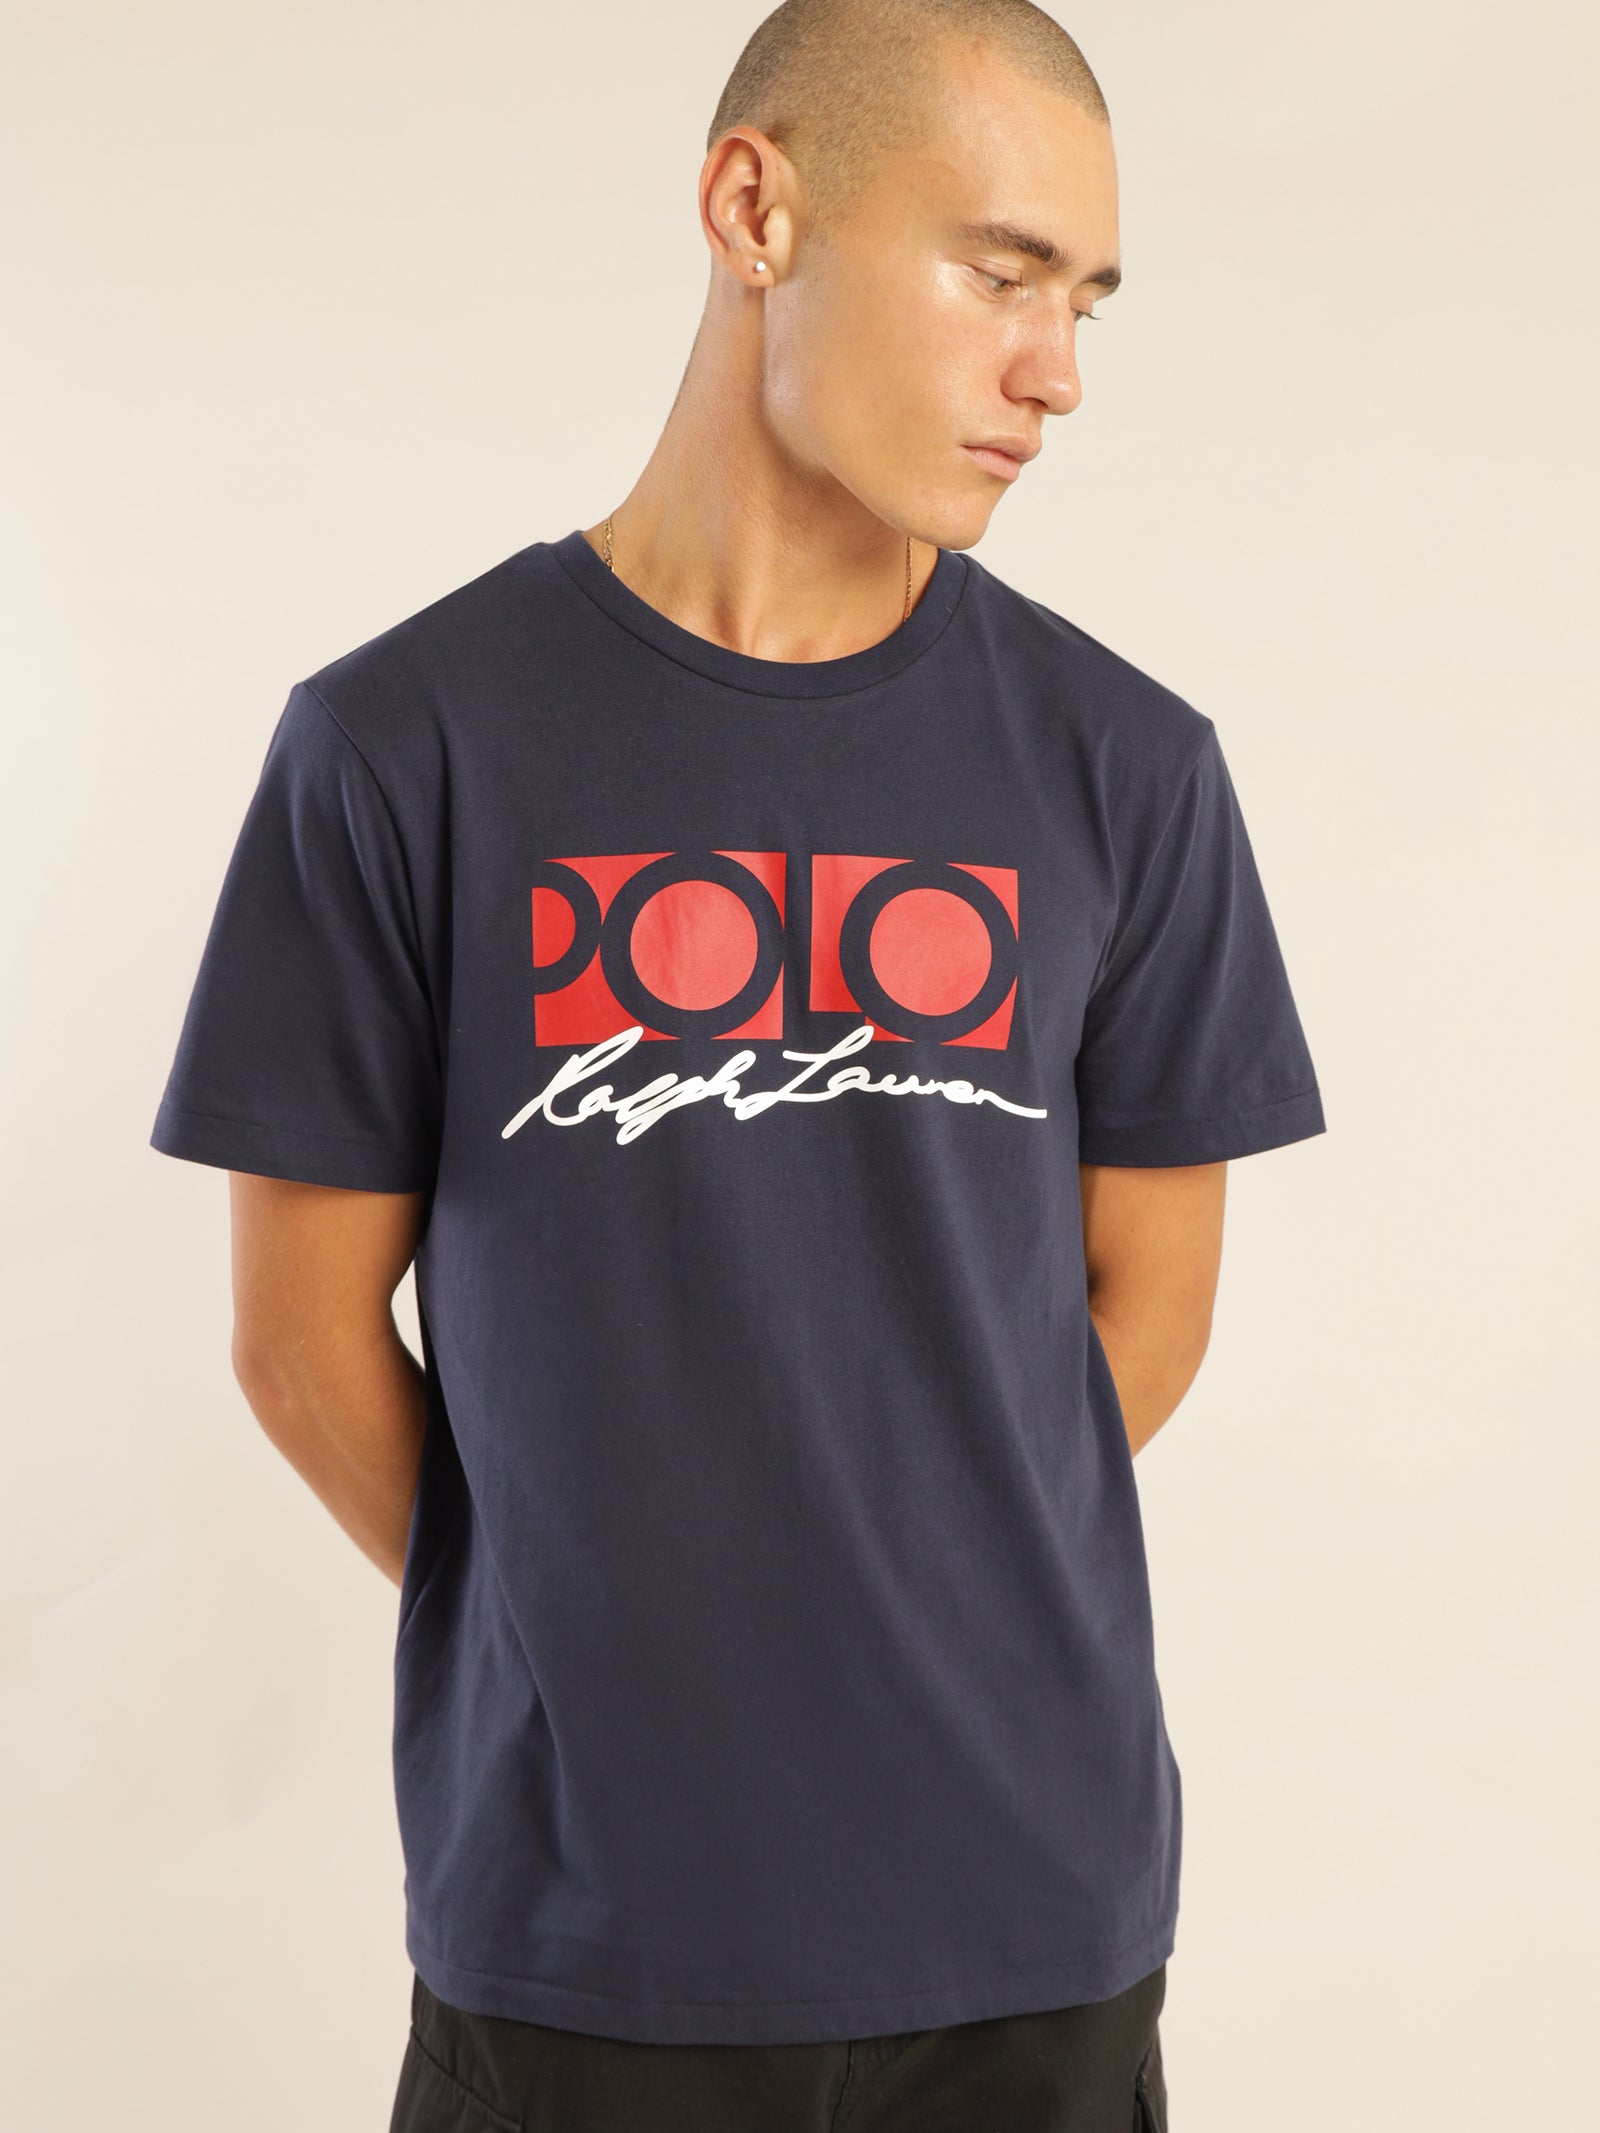 Polo Sport Logo T-Shirt in Newport Navy - Glue Store